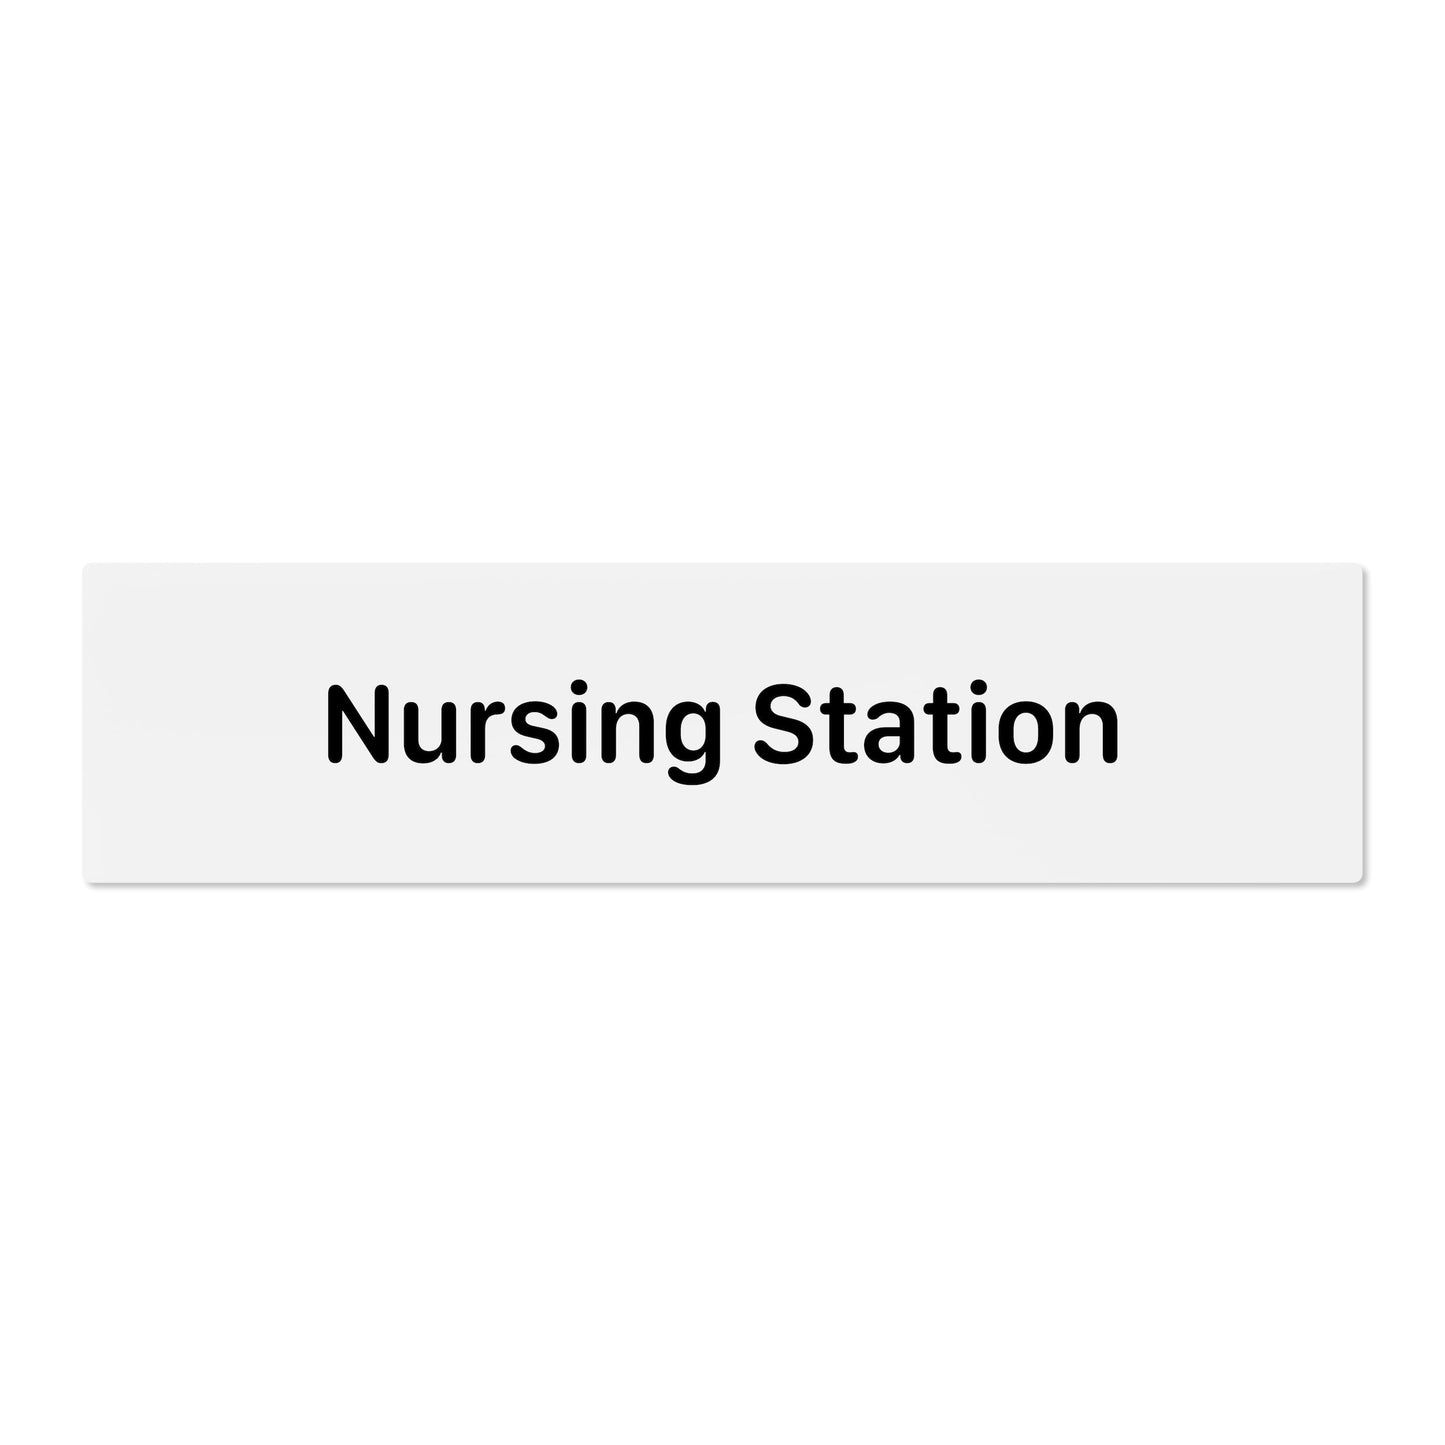 Nursing Station